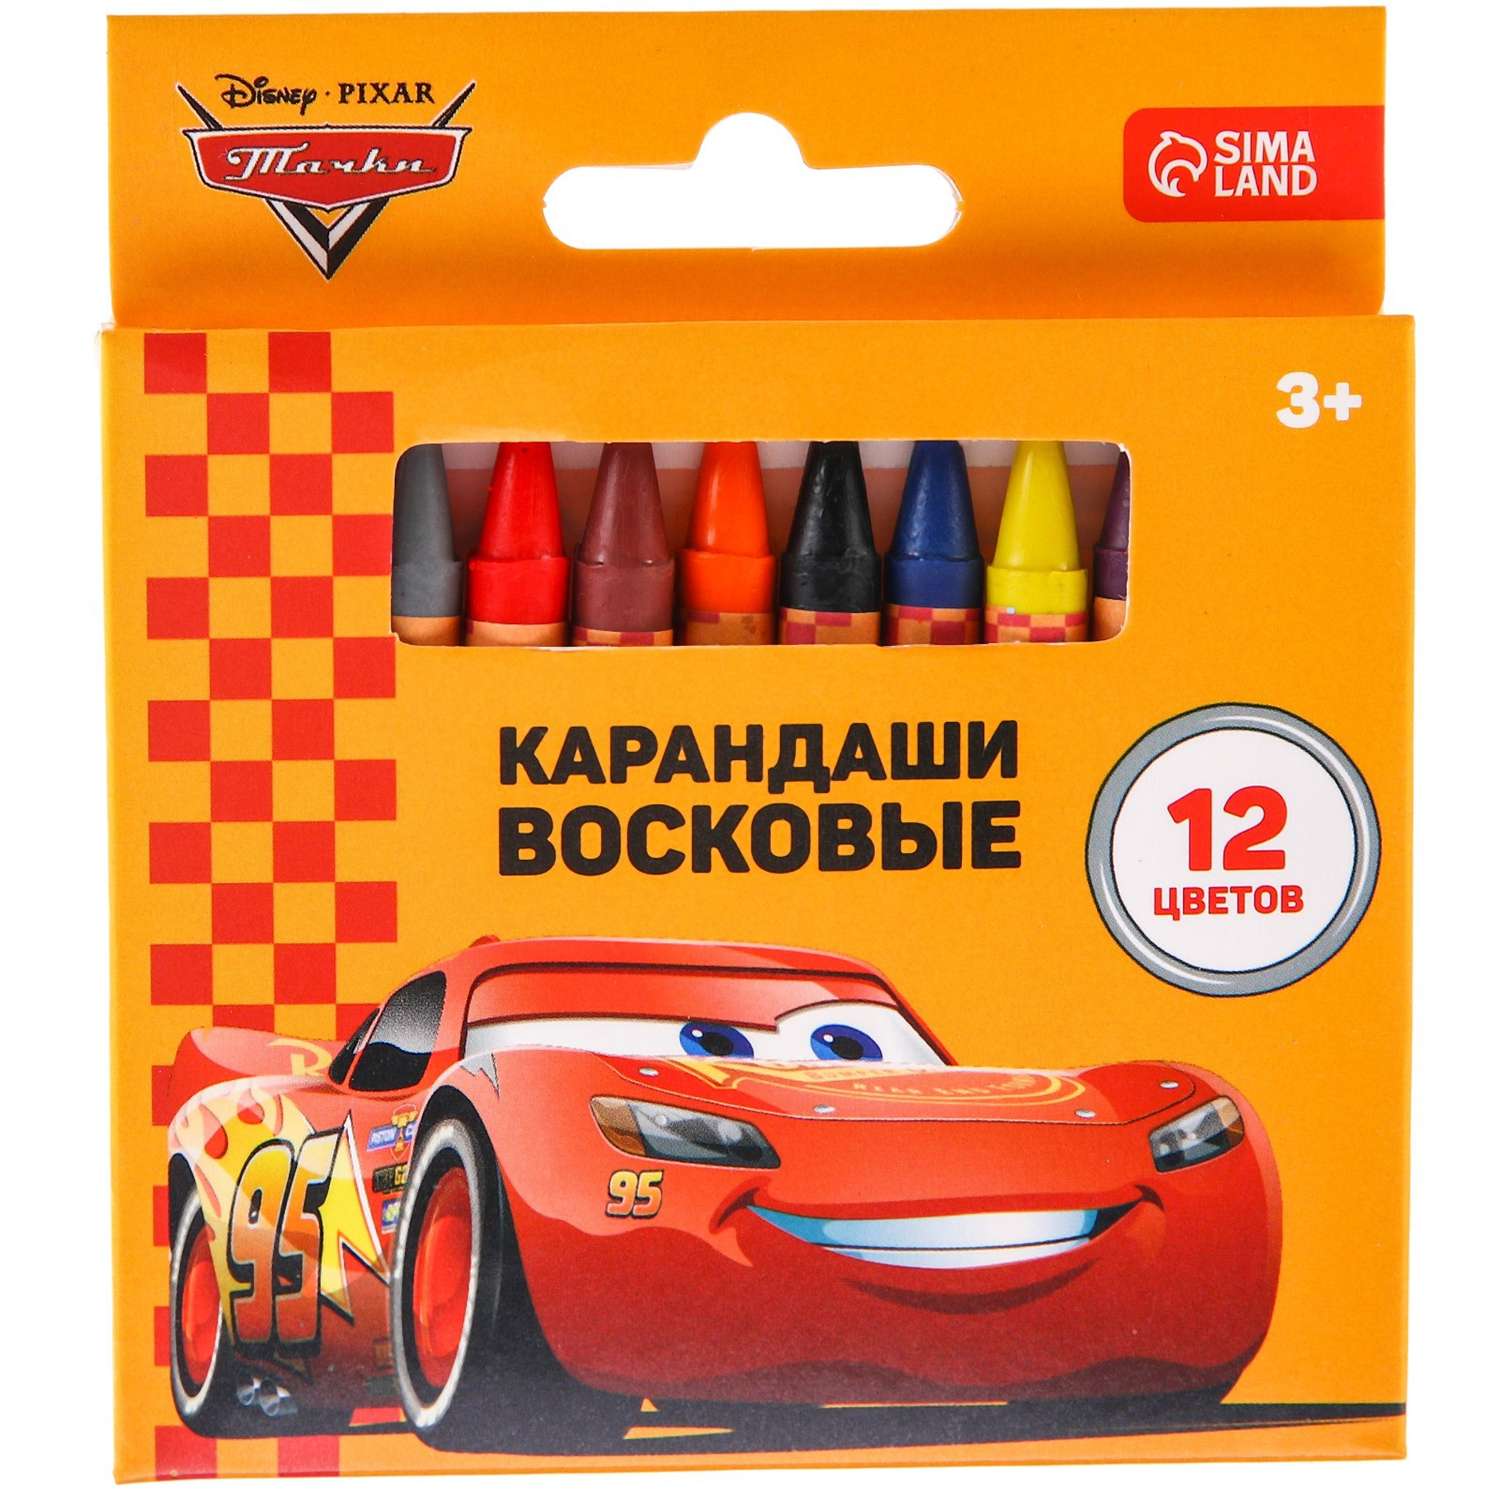 Восковые Disney карандаши набор 12 цветов Тачки - фото 4